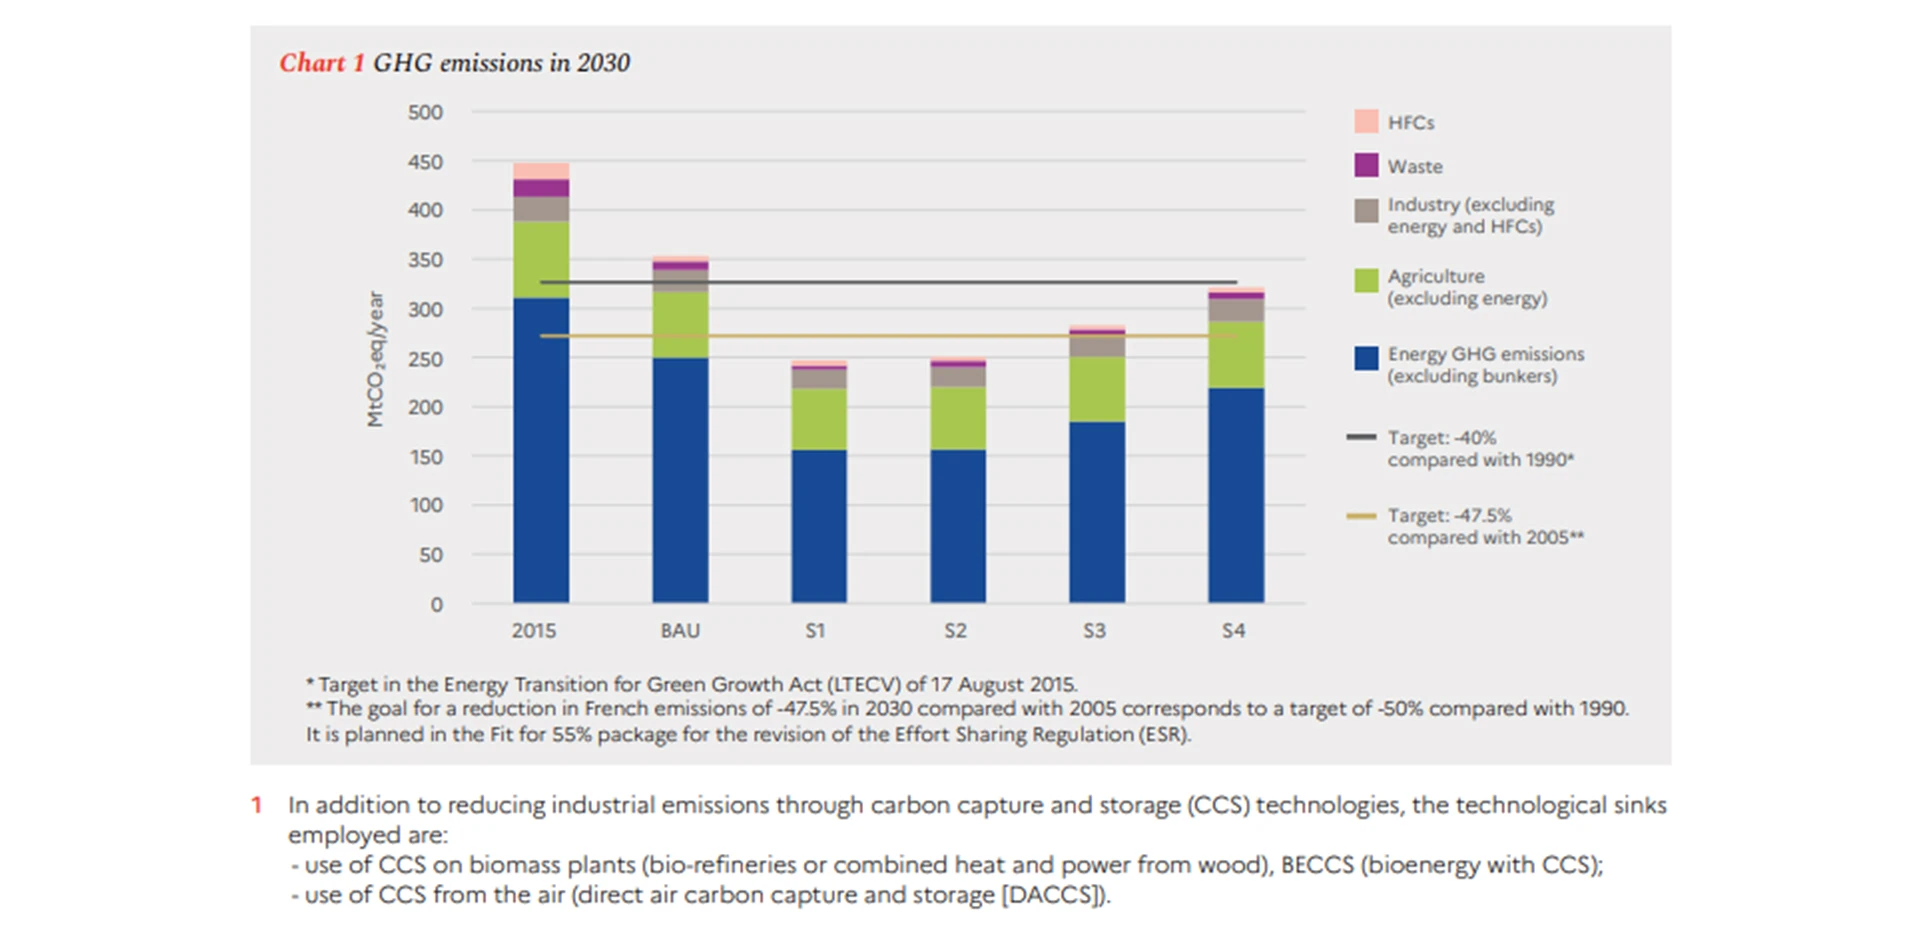 GHG emissions in 2030